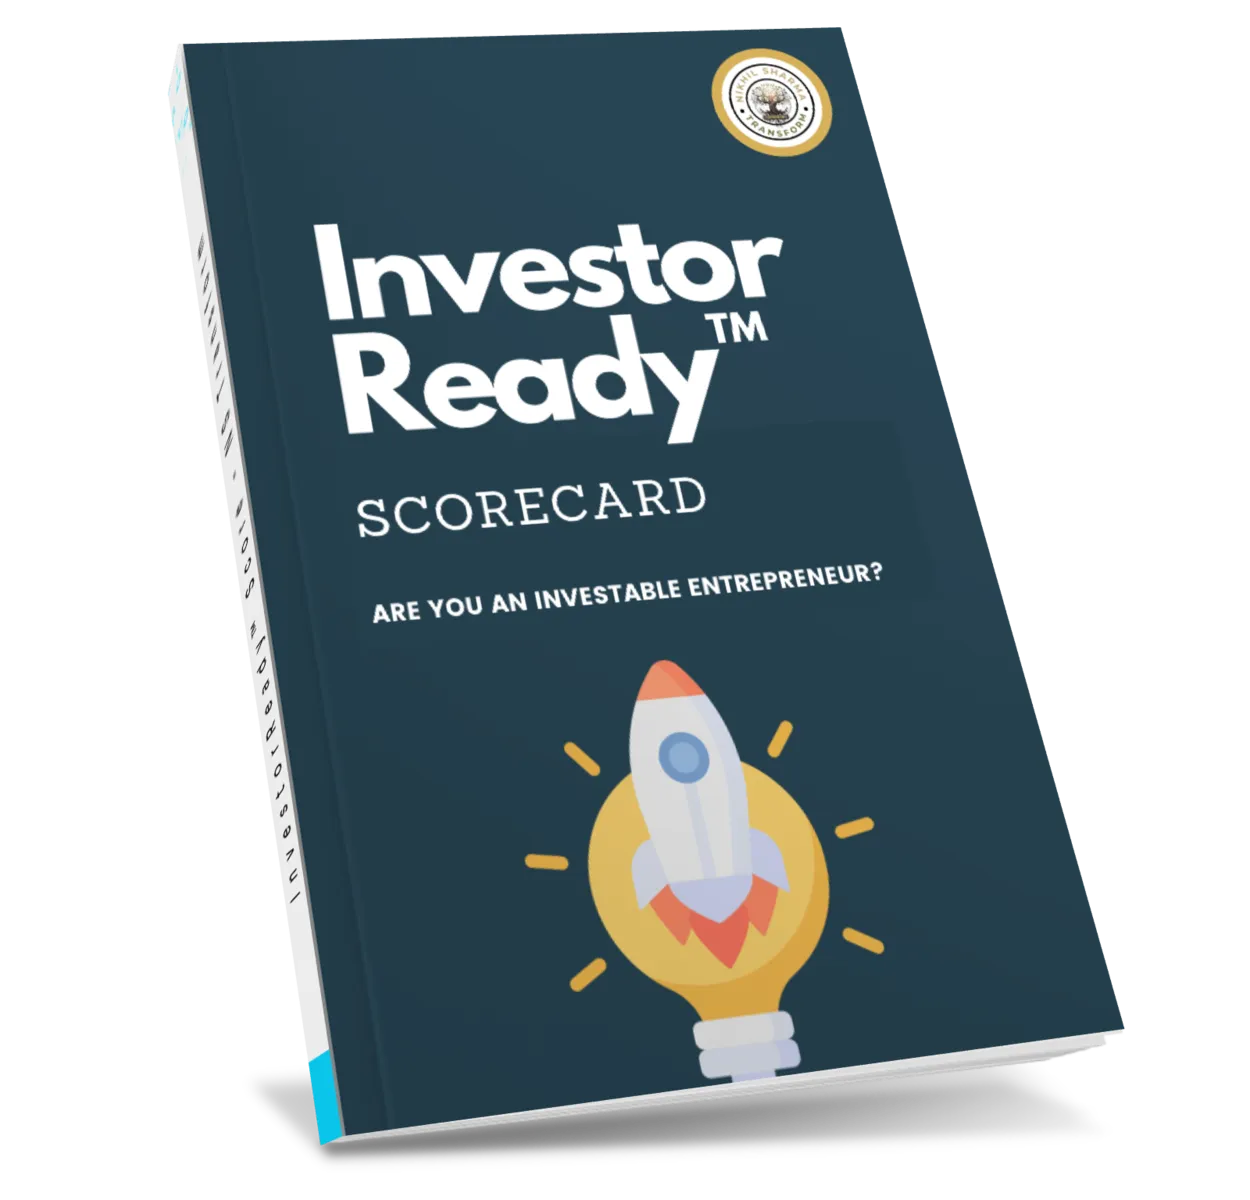 InvestorReady™ Scorecard